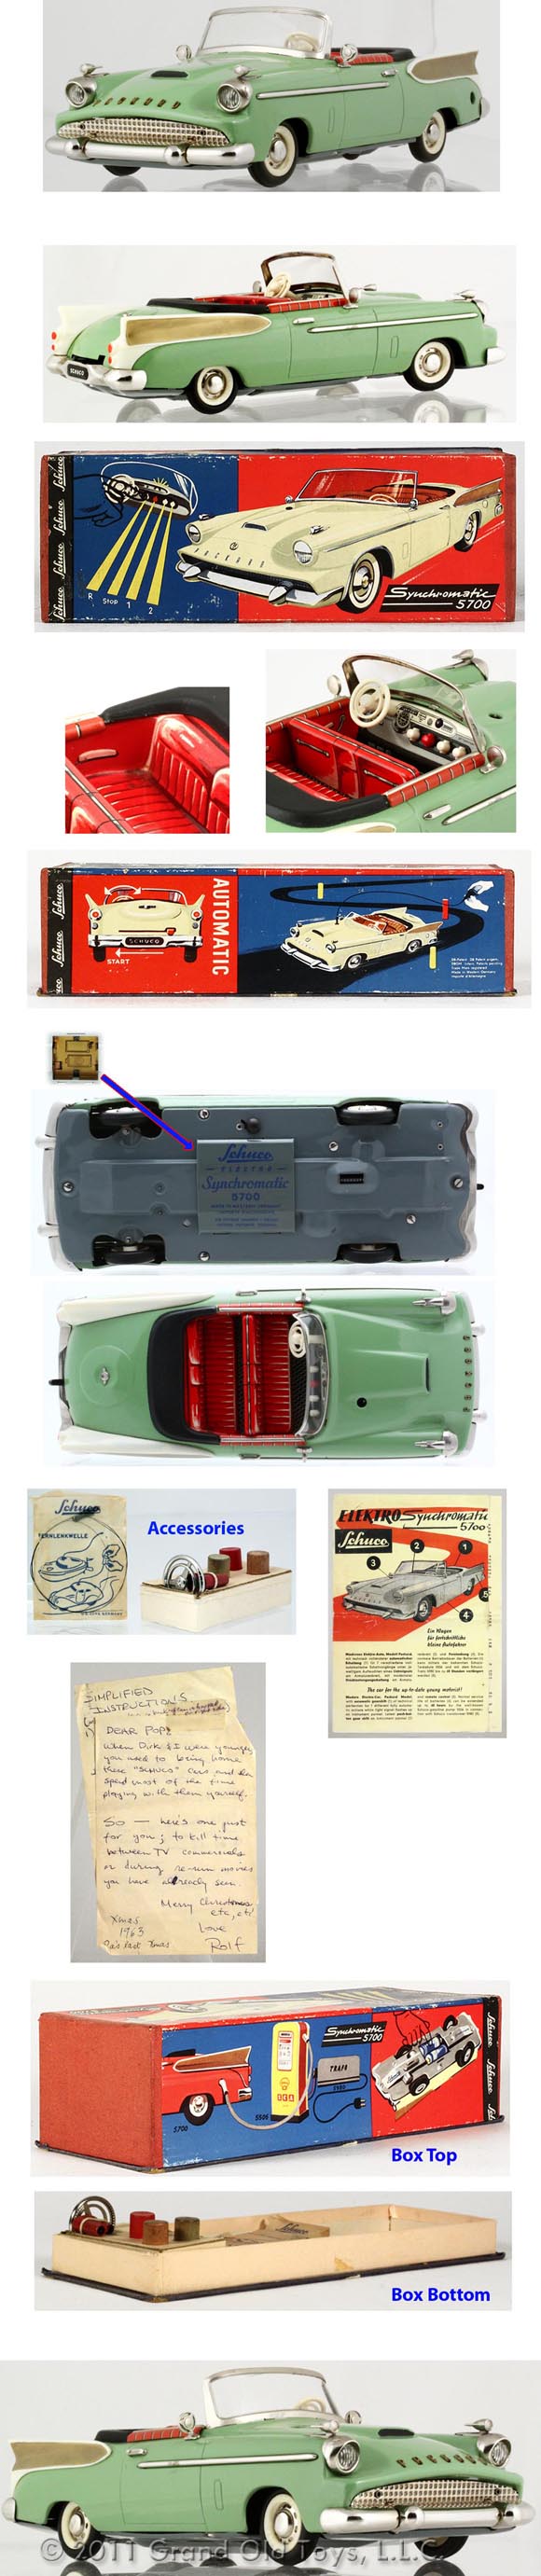 1958 Schuco Synchromatic 5700 Packard Hawk In Original Box